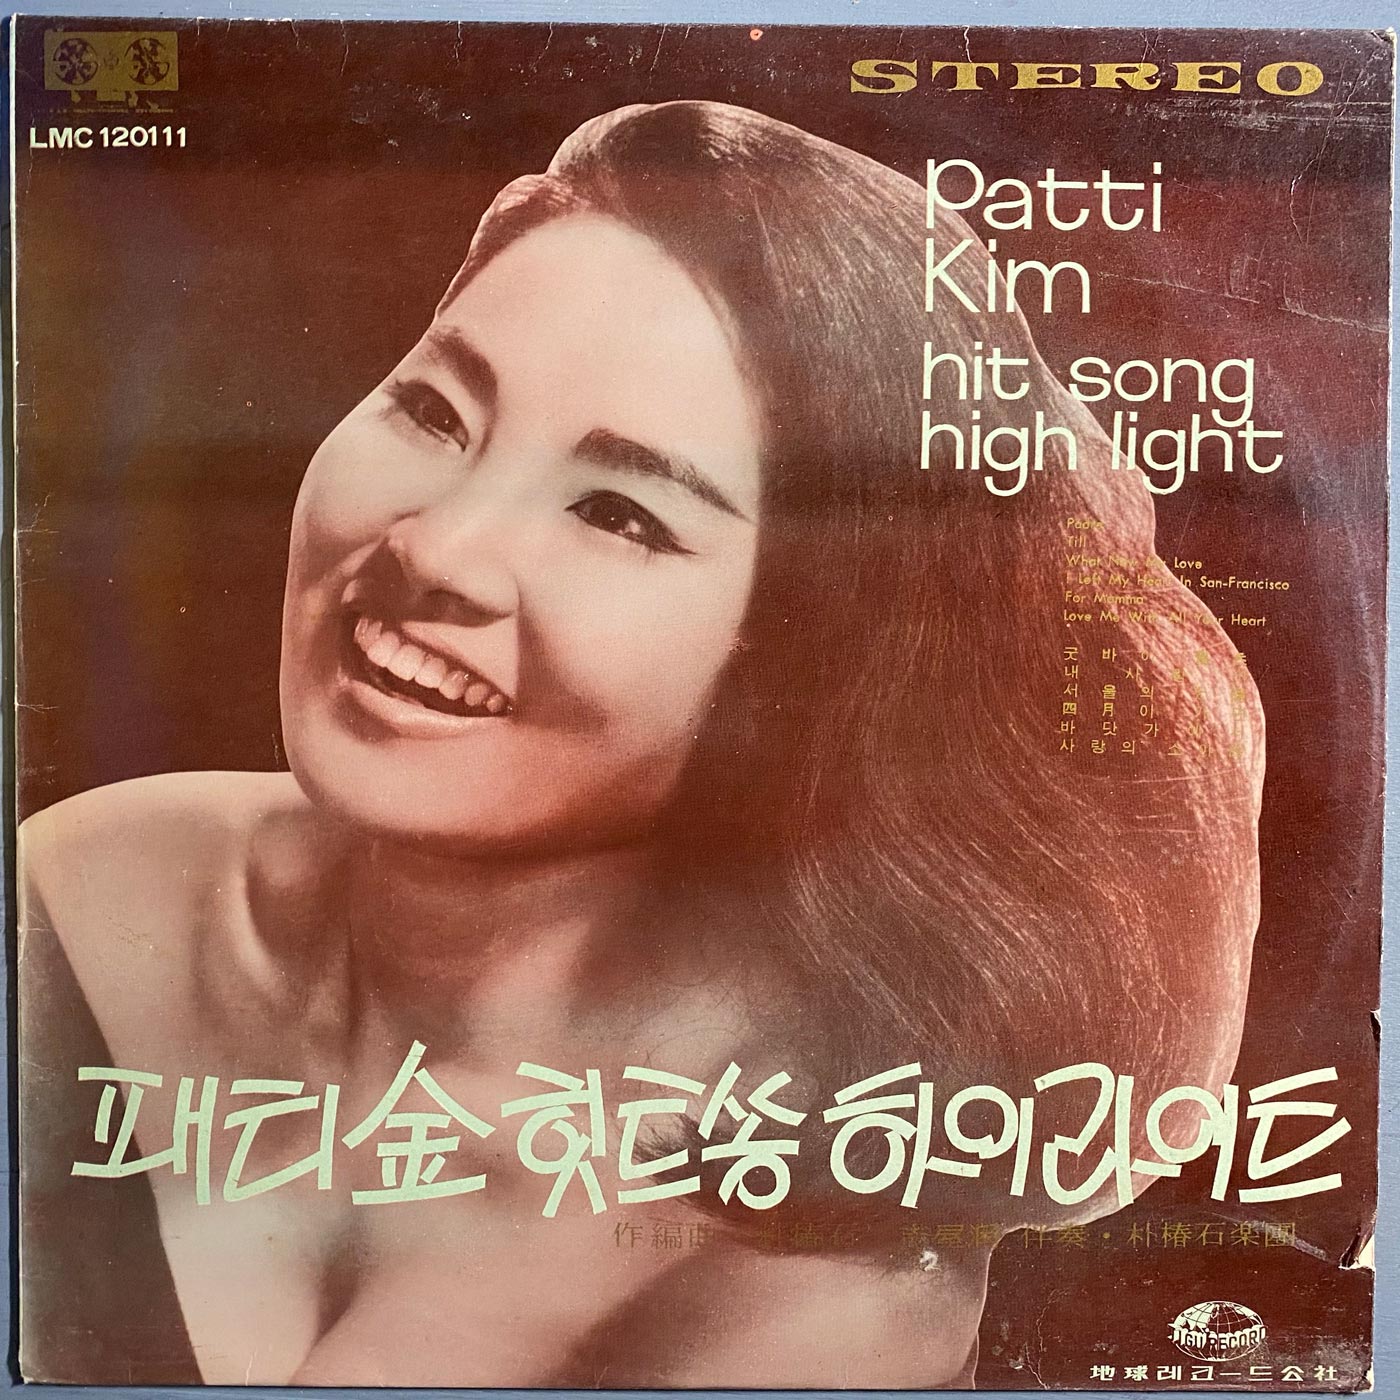 Patti Kim - hit song highlight